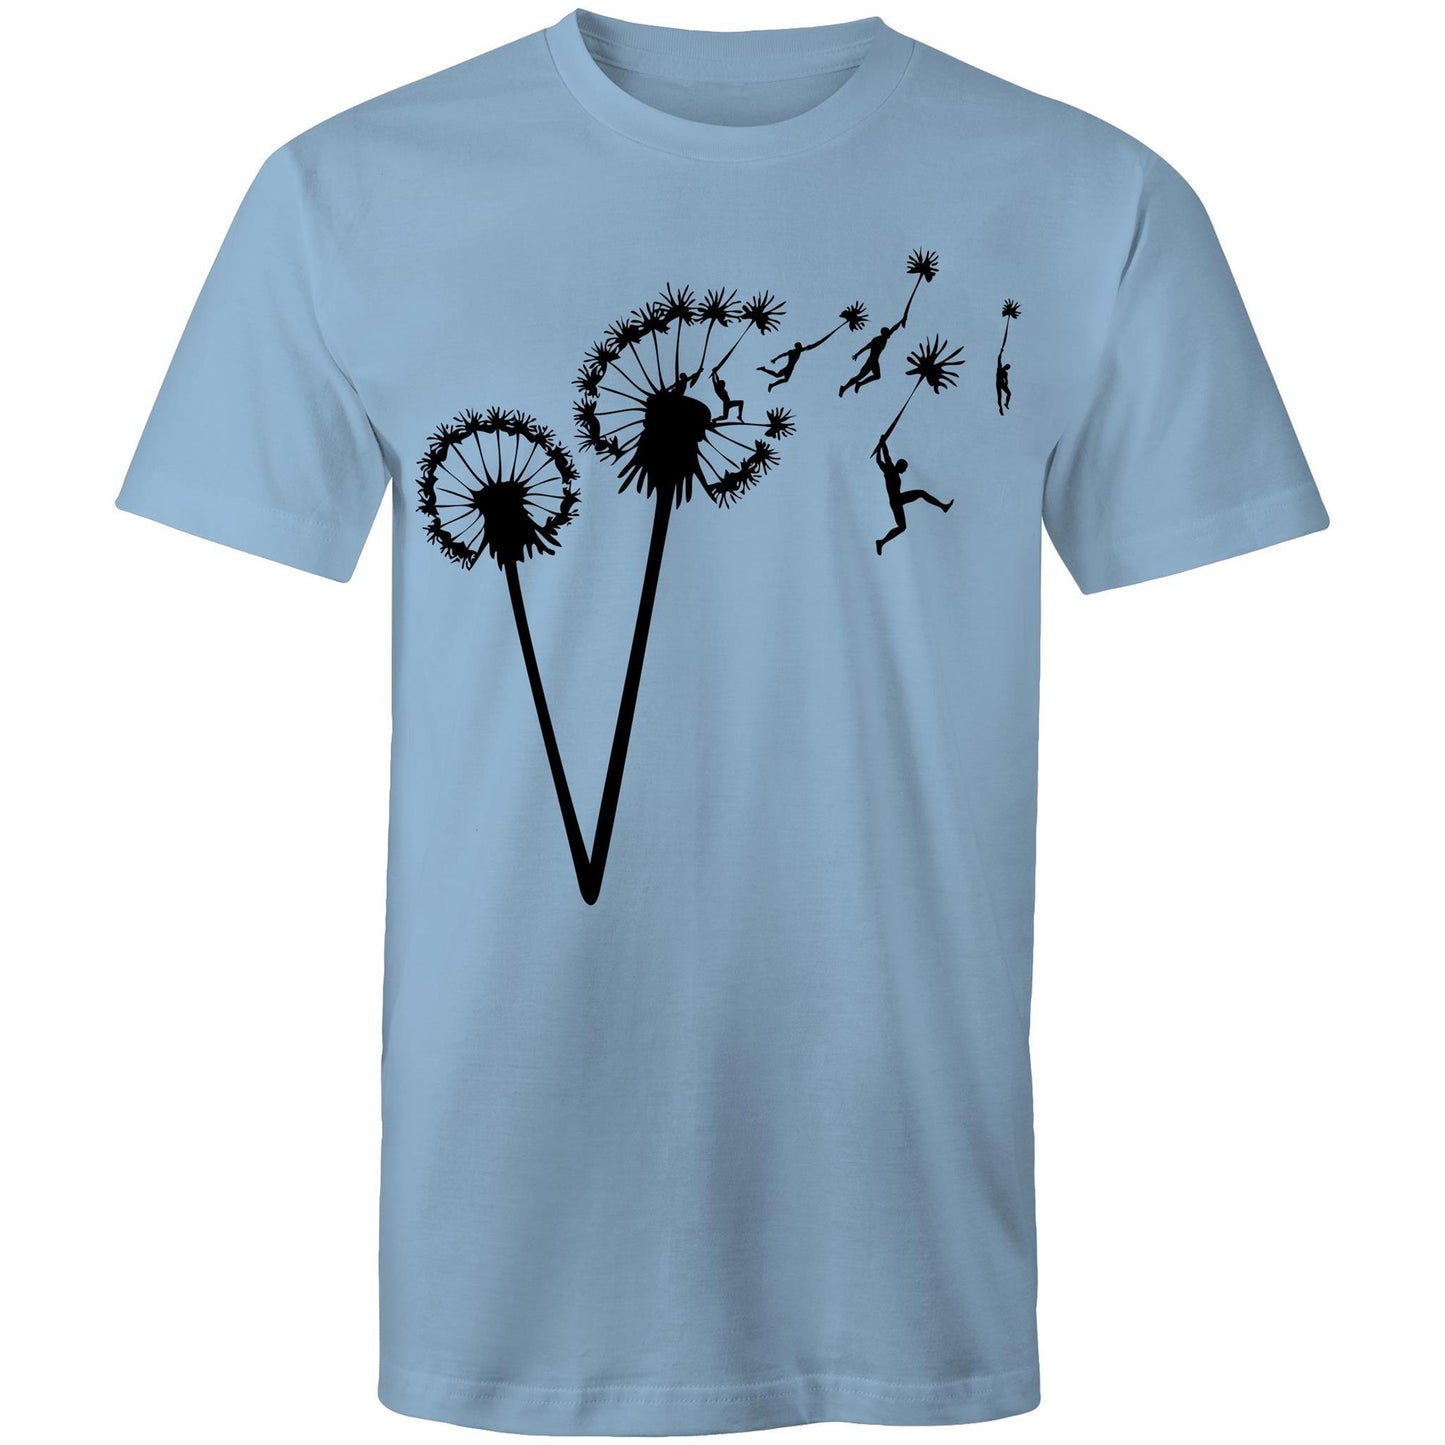 Dandelion People Flight - Men's T-Shirt